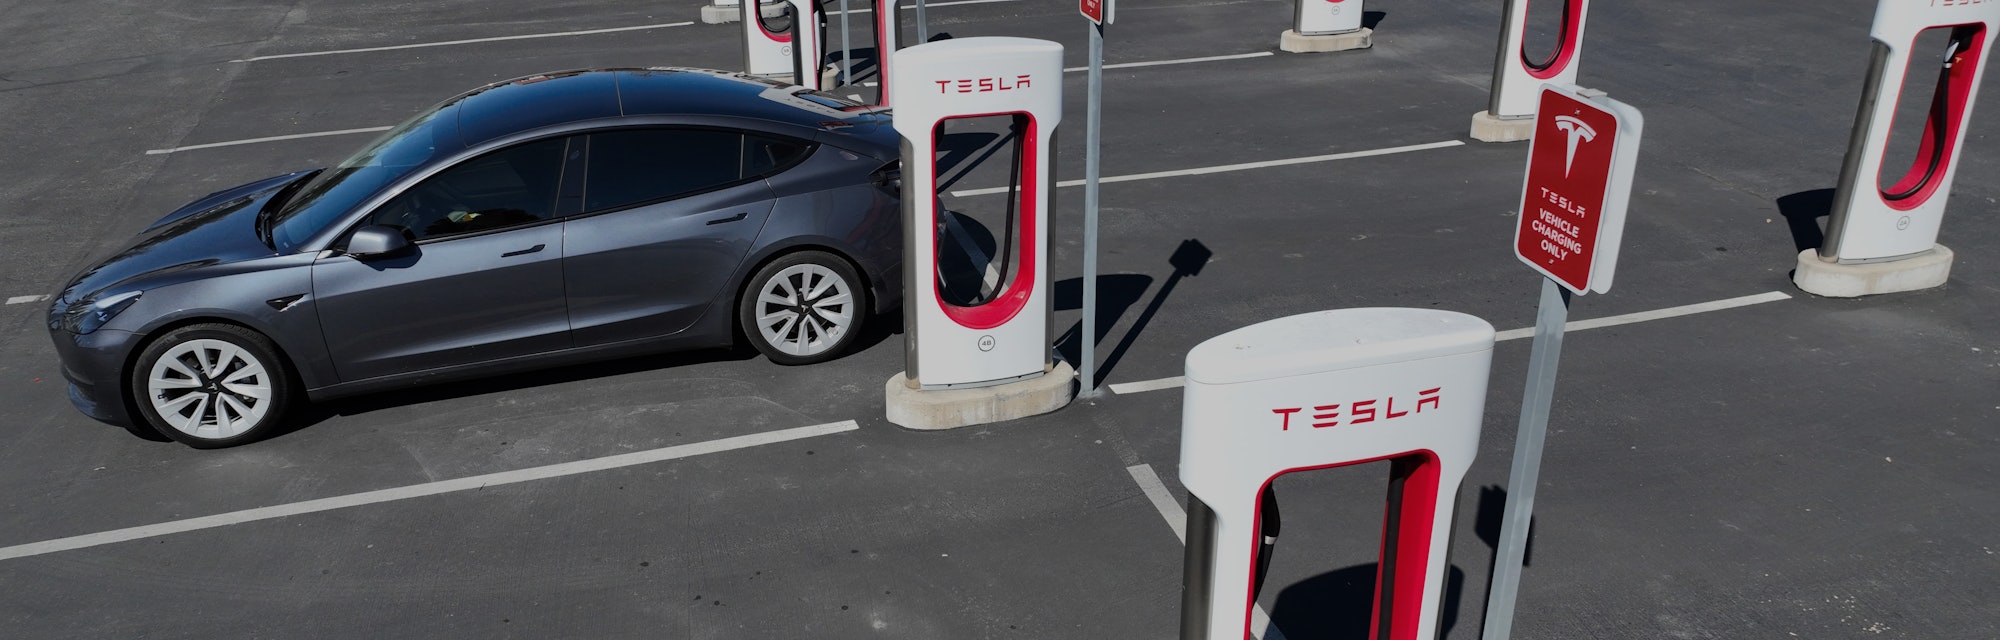 PETALUMA, CALIFORNIA - MARCH 09: In an aerial view, a Tesla car recharges its battery at the Petalum...